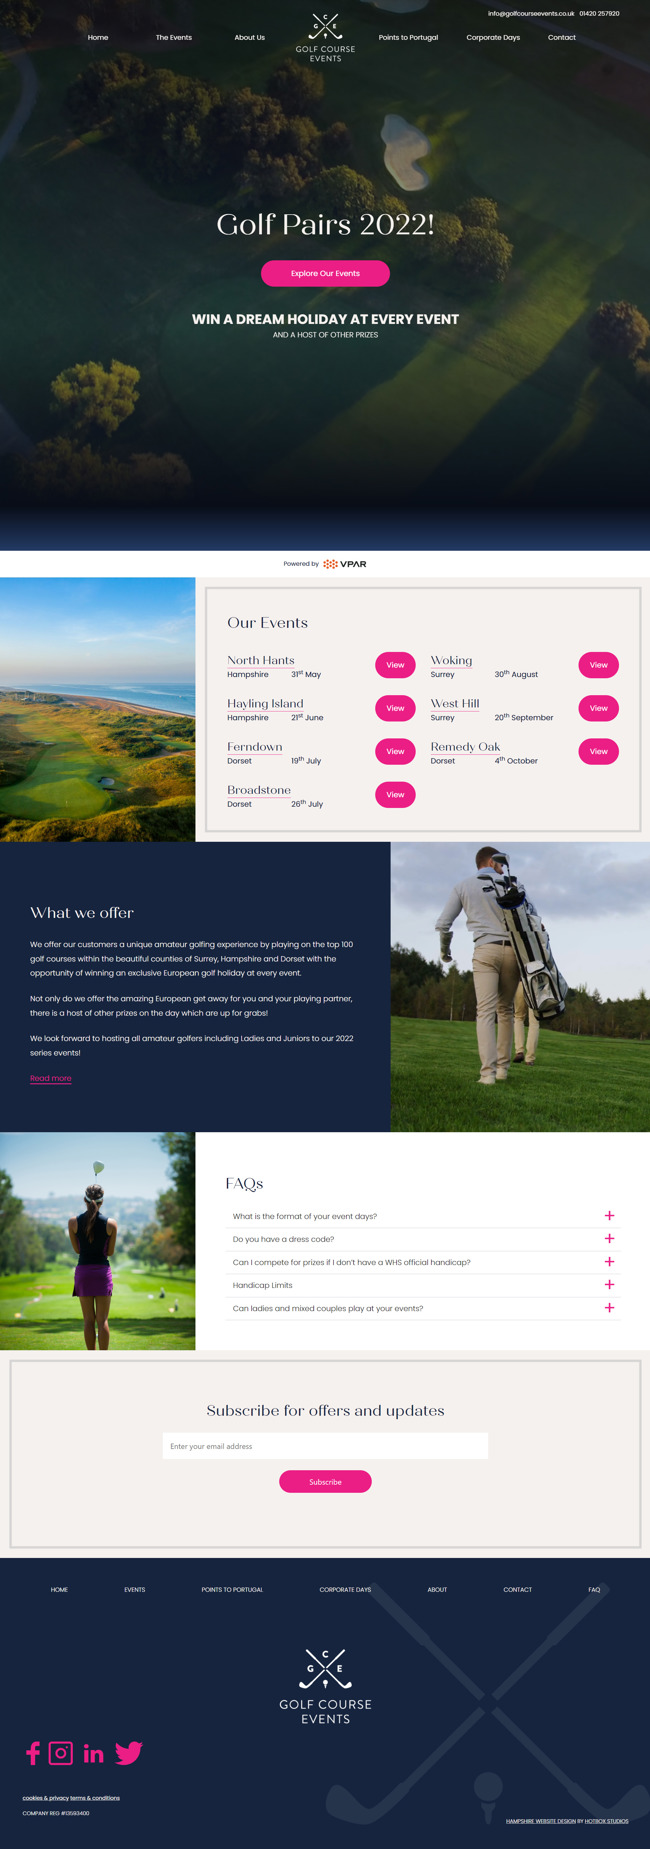 Golf Course Events Website Design And Wordpress Web Development SP001 Homepage